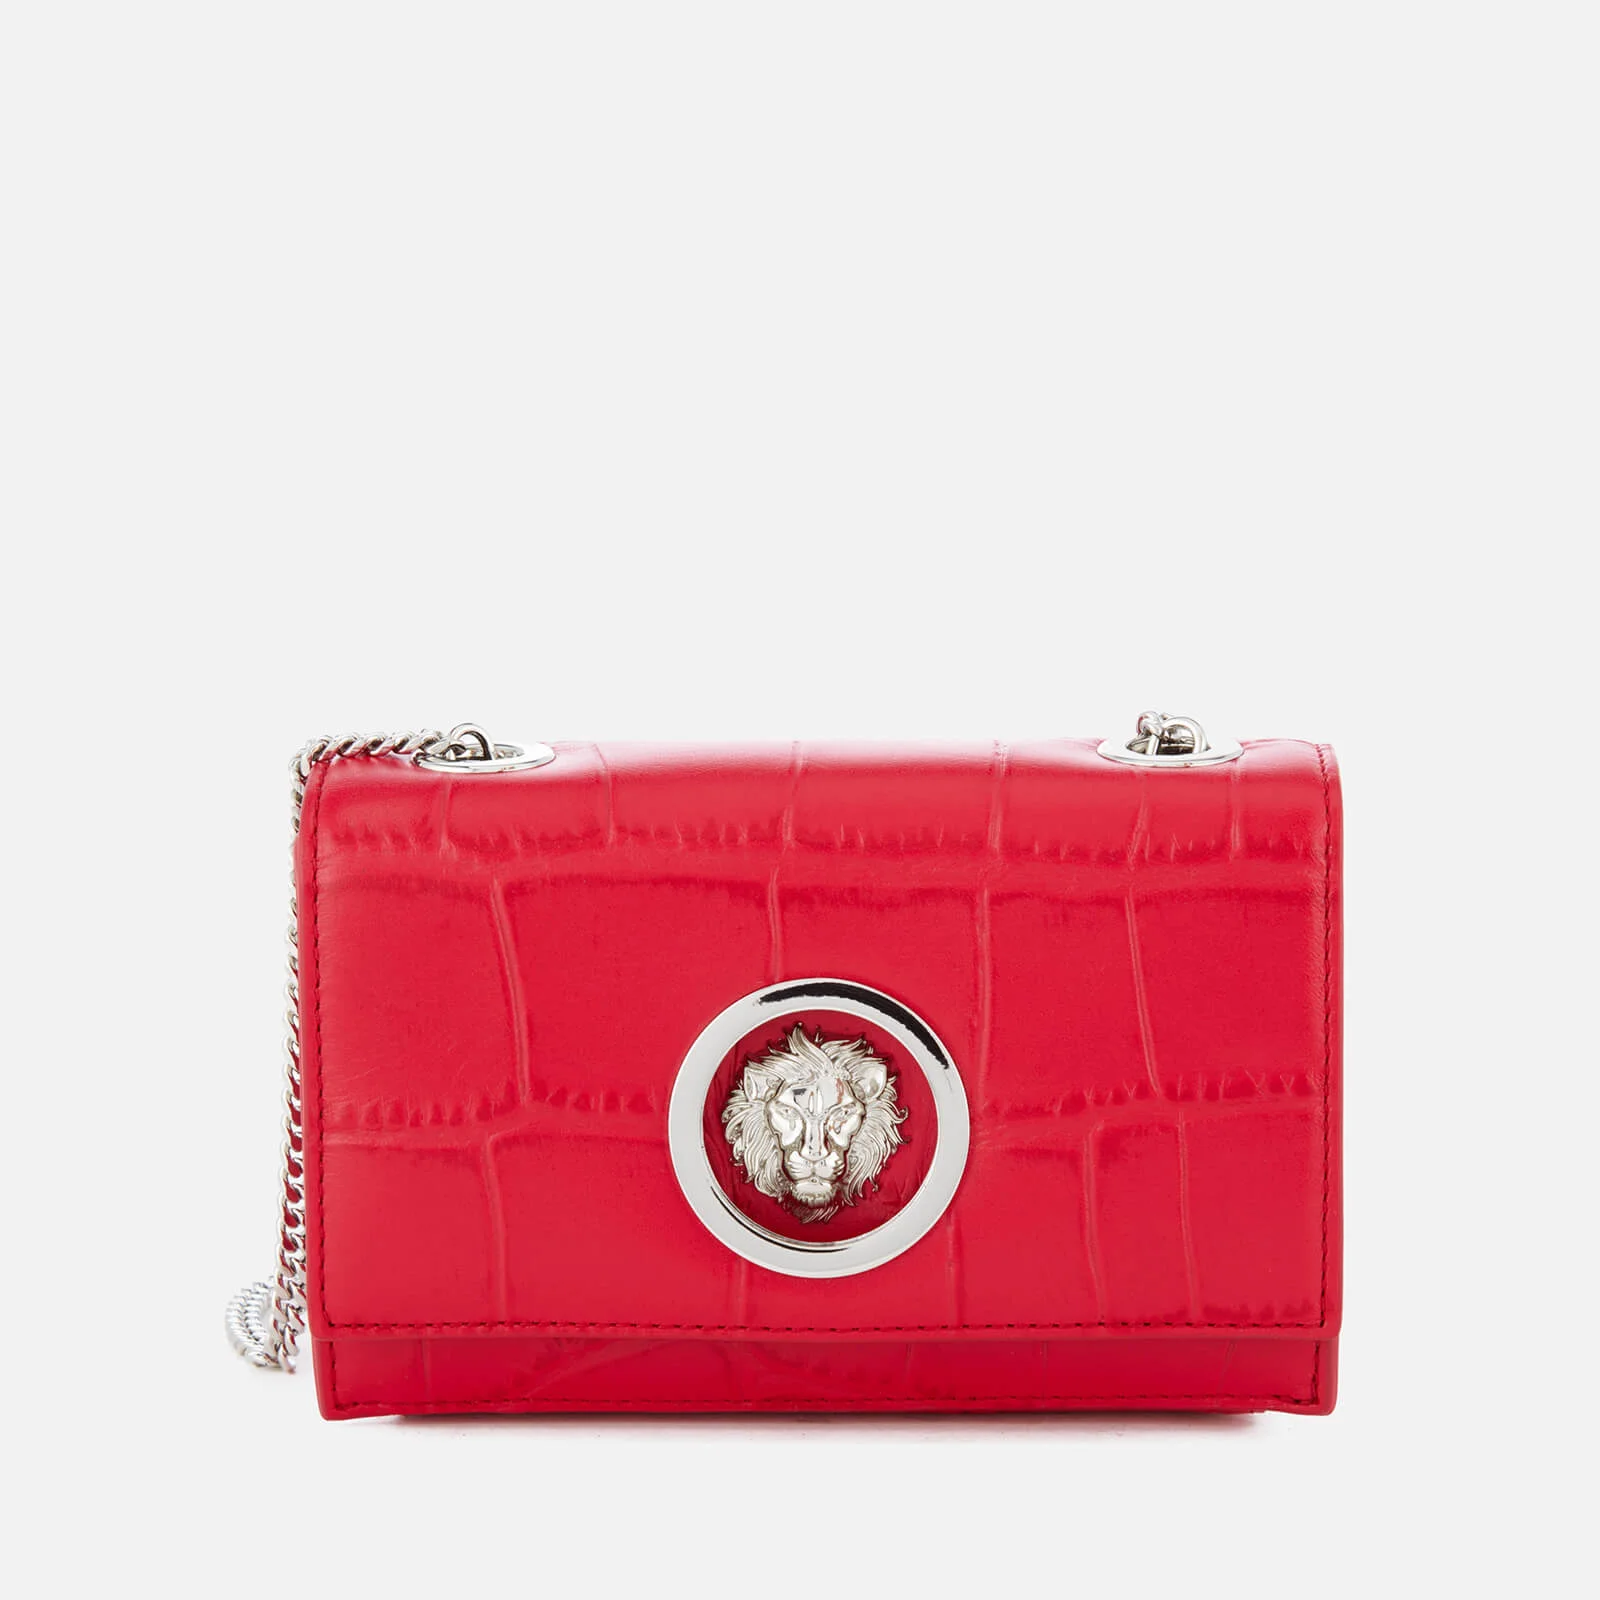 Versus Versace Women's Lion Croc Small Clutch Bag - Red Image 1